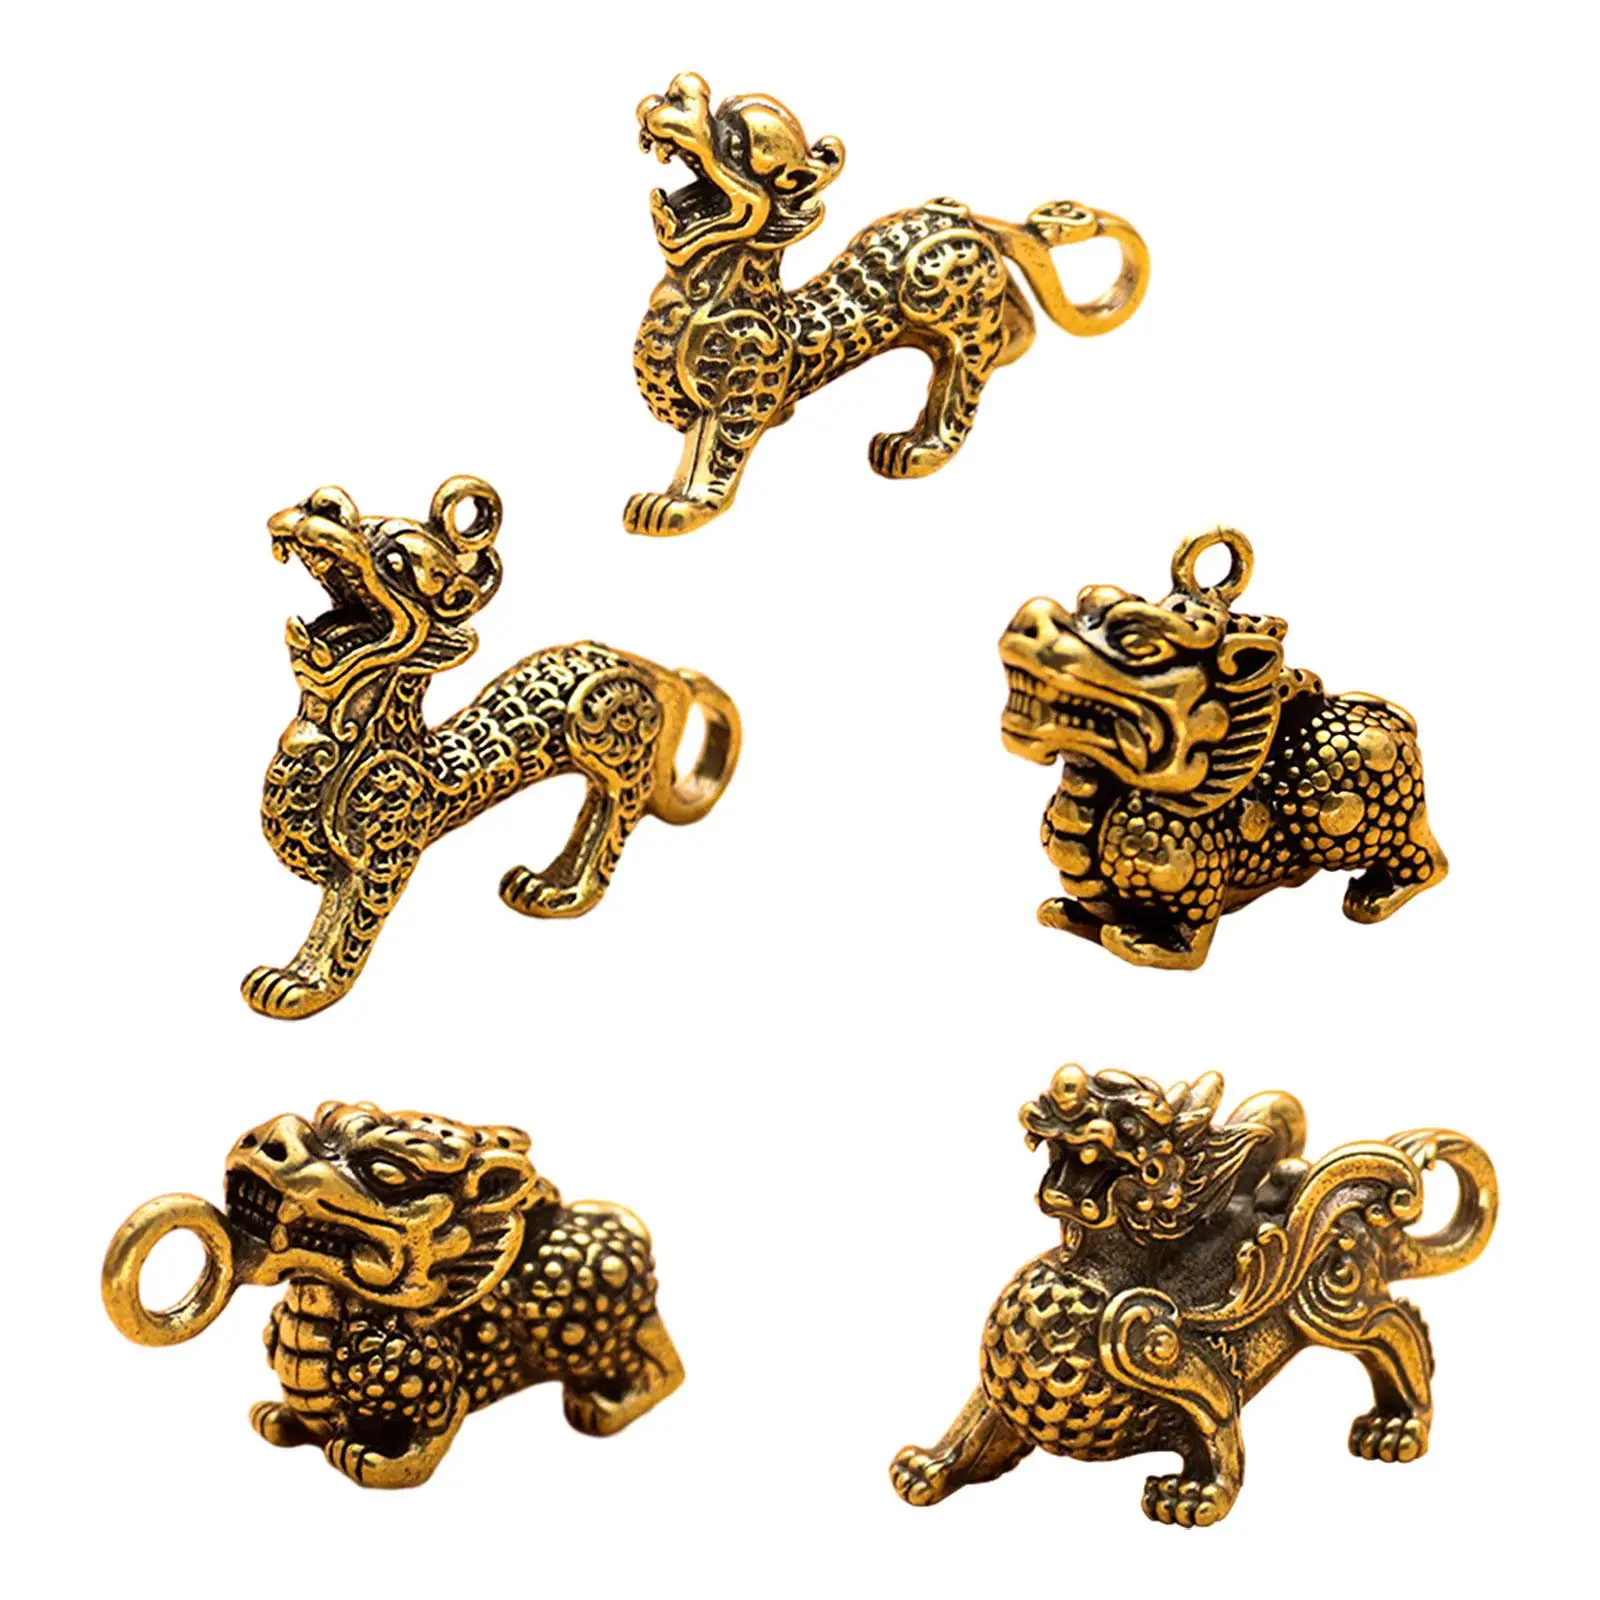 Brass Kirin Key Pendants Retro Styled Home Decor Sculpture Sturdy Kylin Keychains Pendant Charms Feng Shui Brass Kylin Statue